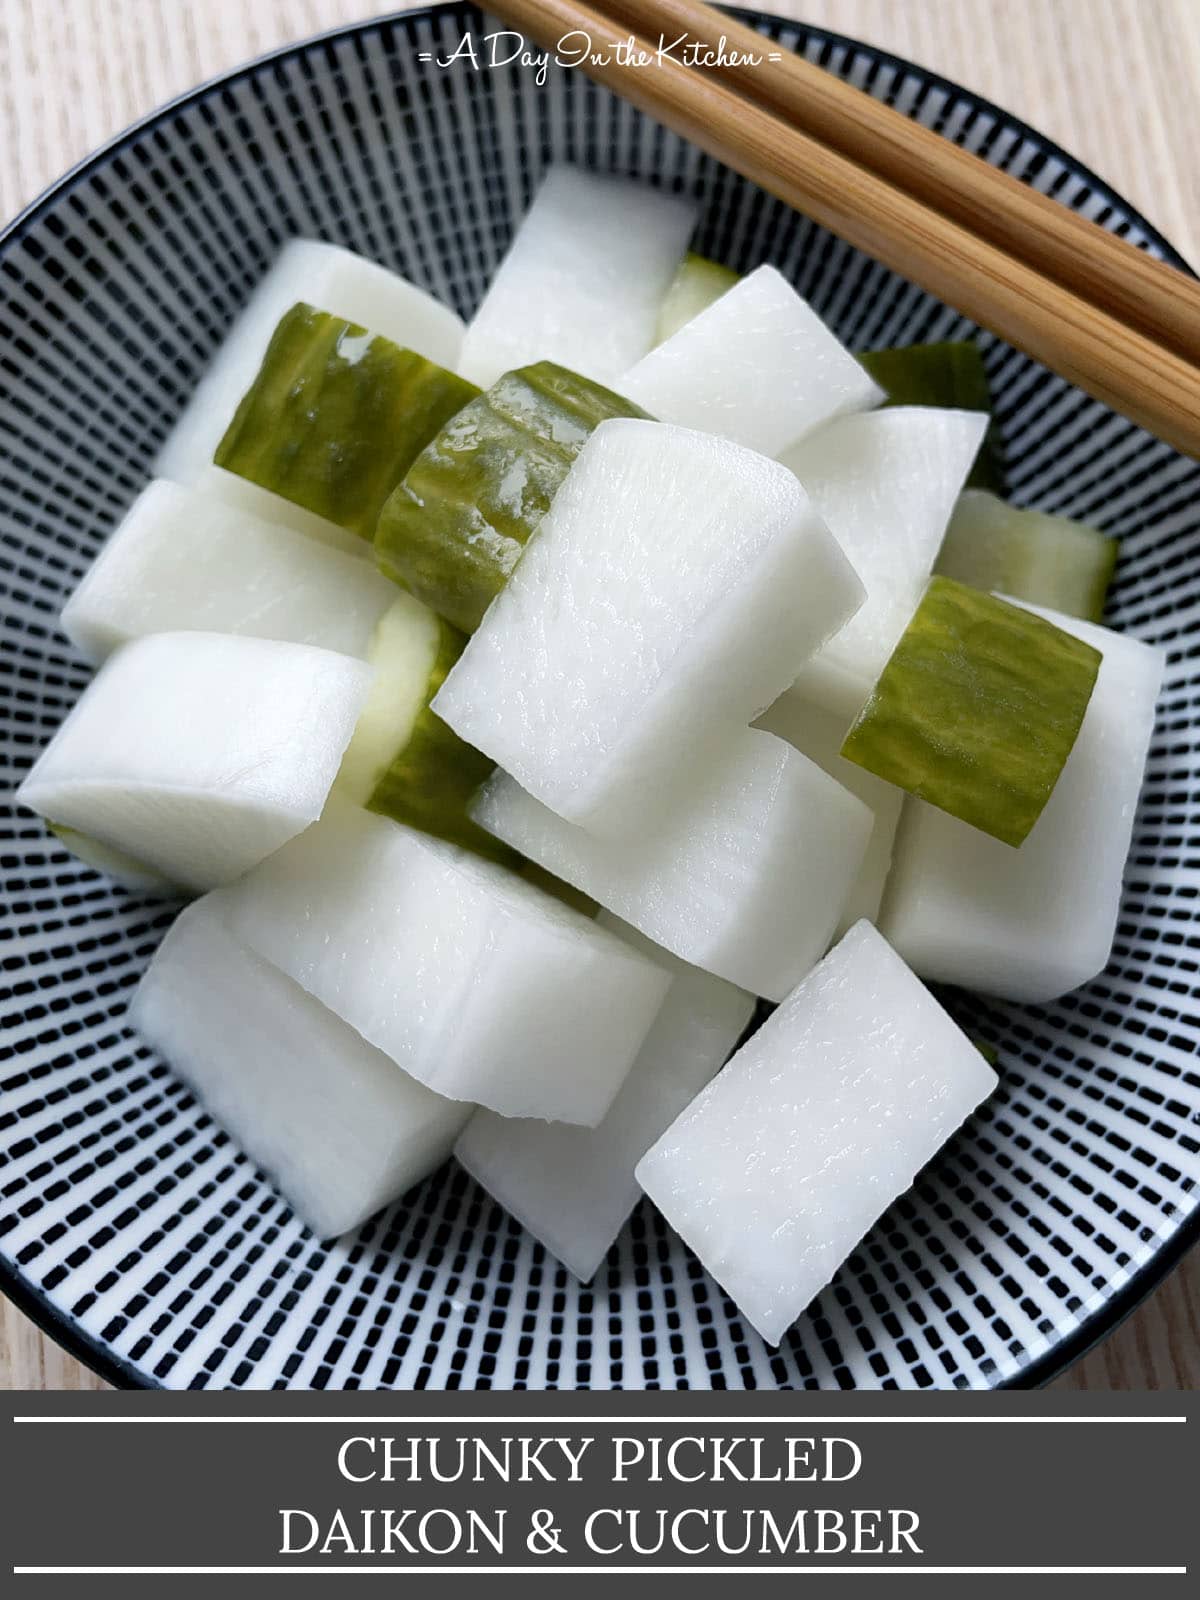 Daikon and Fried Tofu Miso Soup 大根と油揚げの味噌汁 • Simply One Cookbook